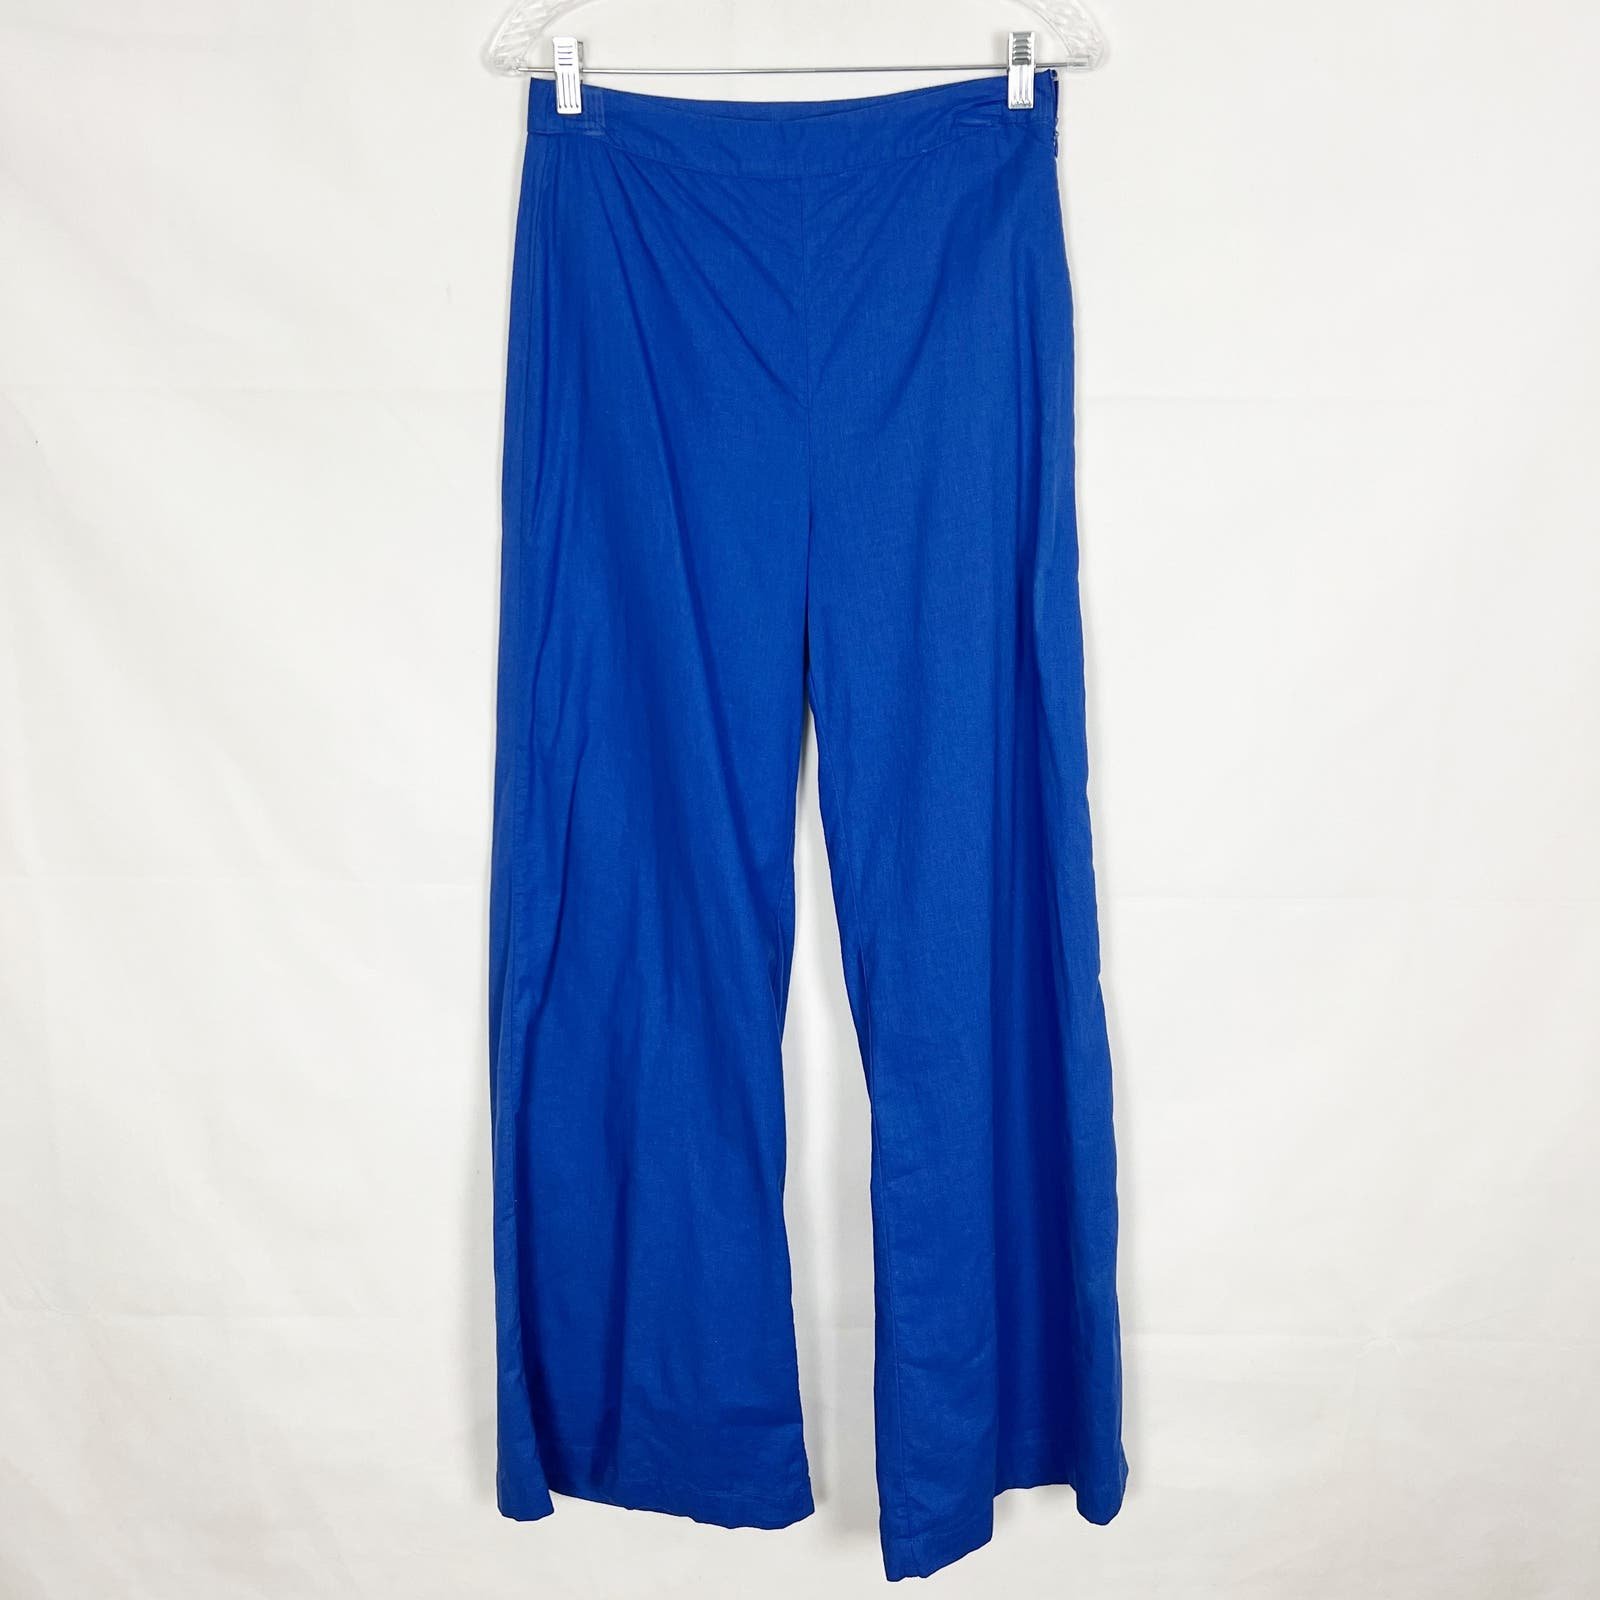 Personality Lulus Linen Blend High-Rise Royal Blue Bell Bottom Pants Size Medium maDqpOslj US Outlet